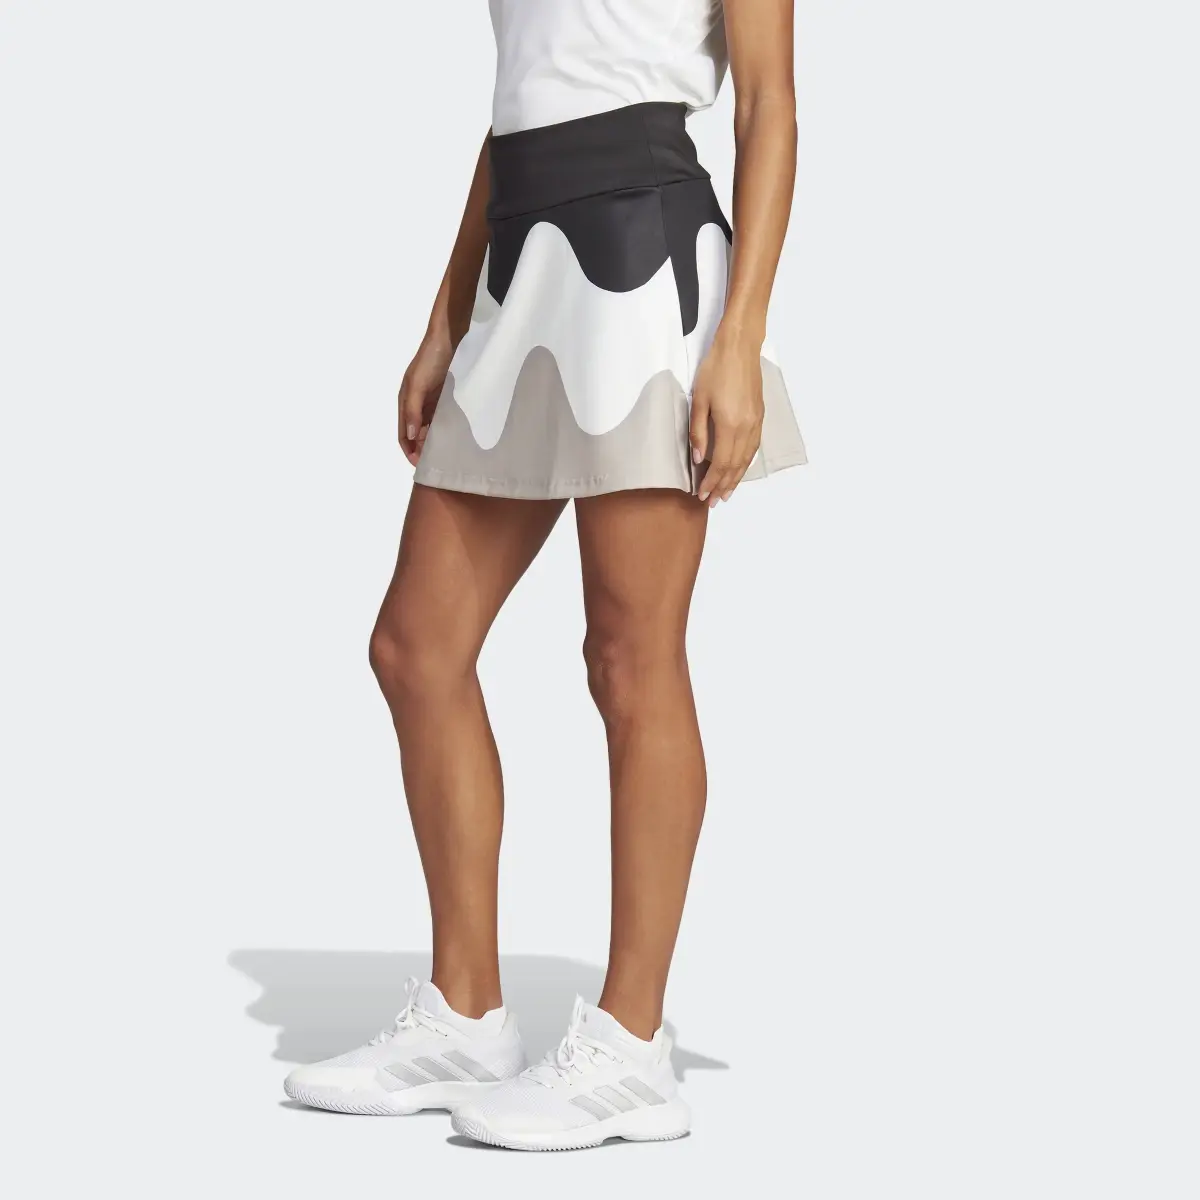 Adidas Marimekko Tennis Skirt. 2